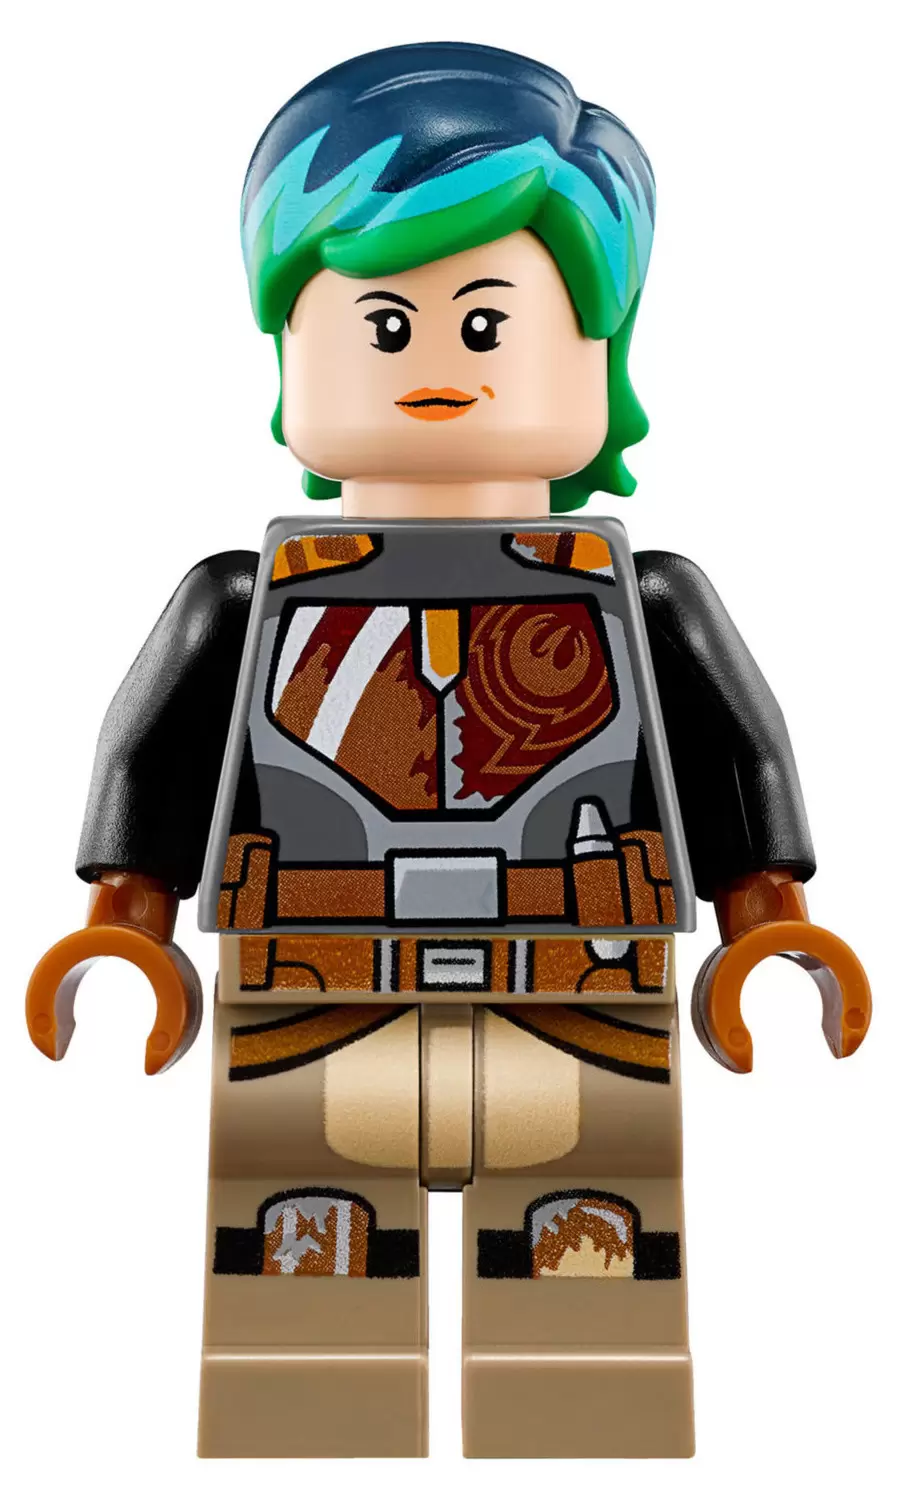 LEGO Star Wars Minifigs - Sabine Wren - Bright Green and Dark Blue Hair